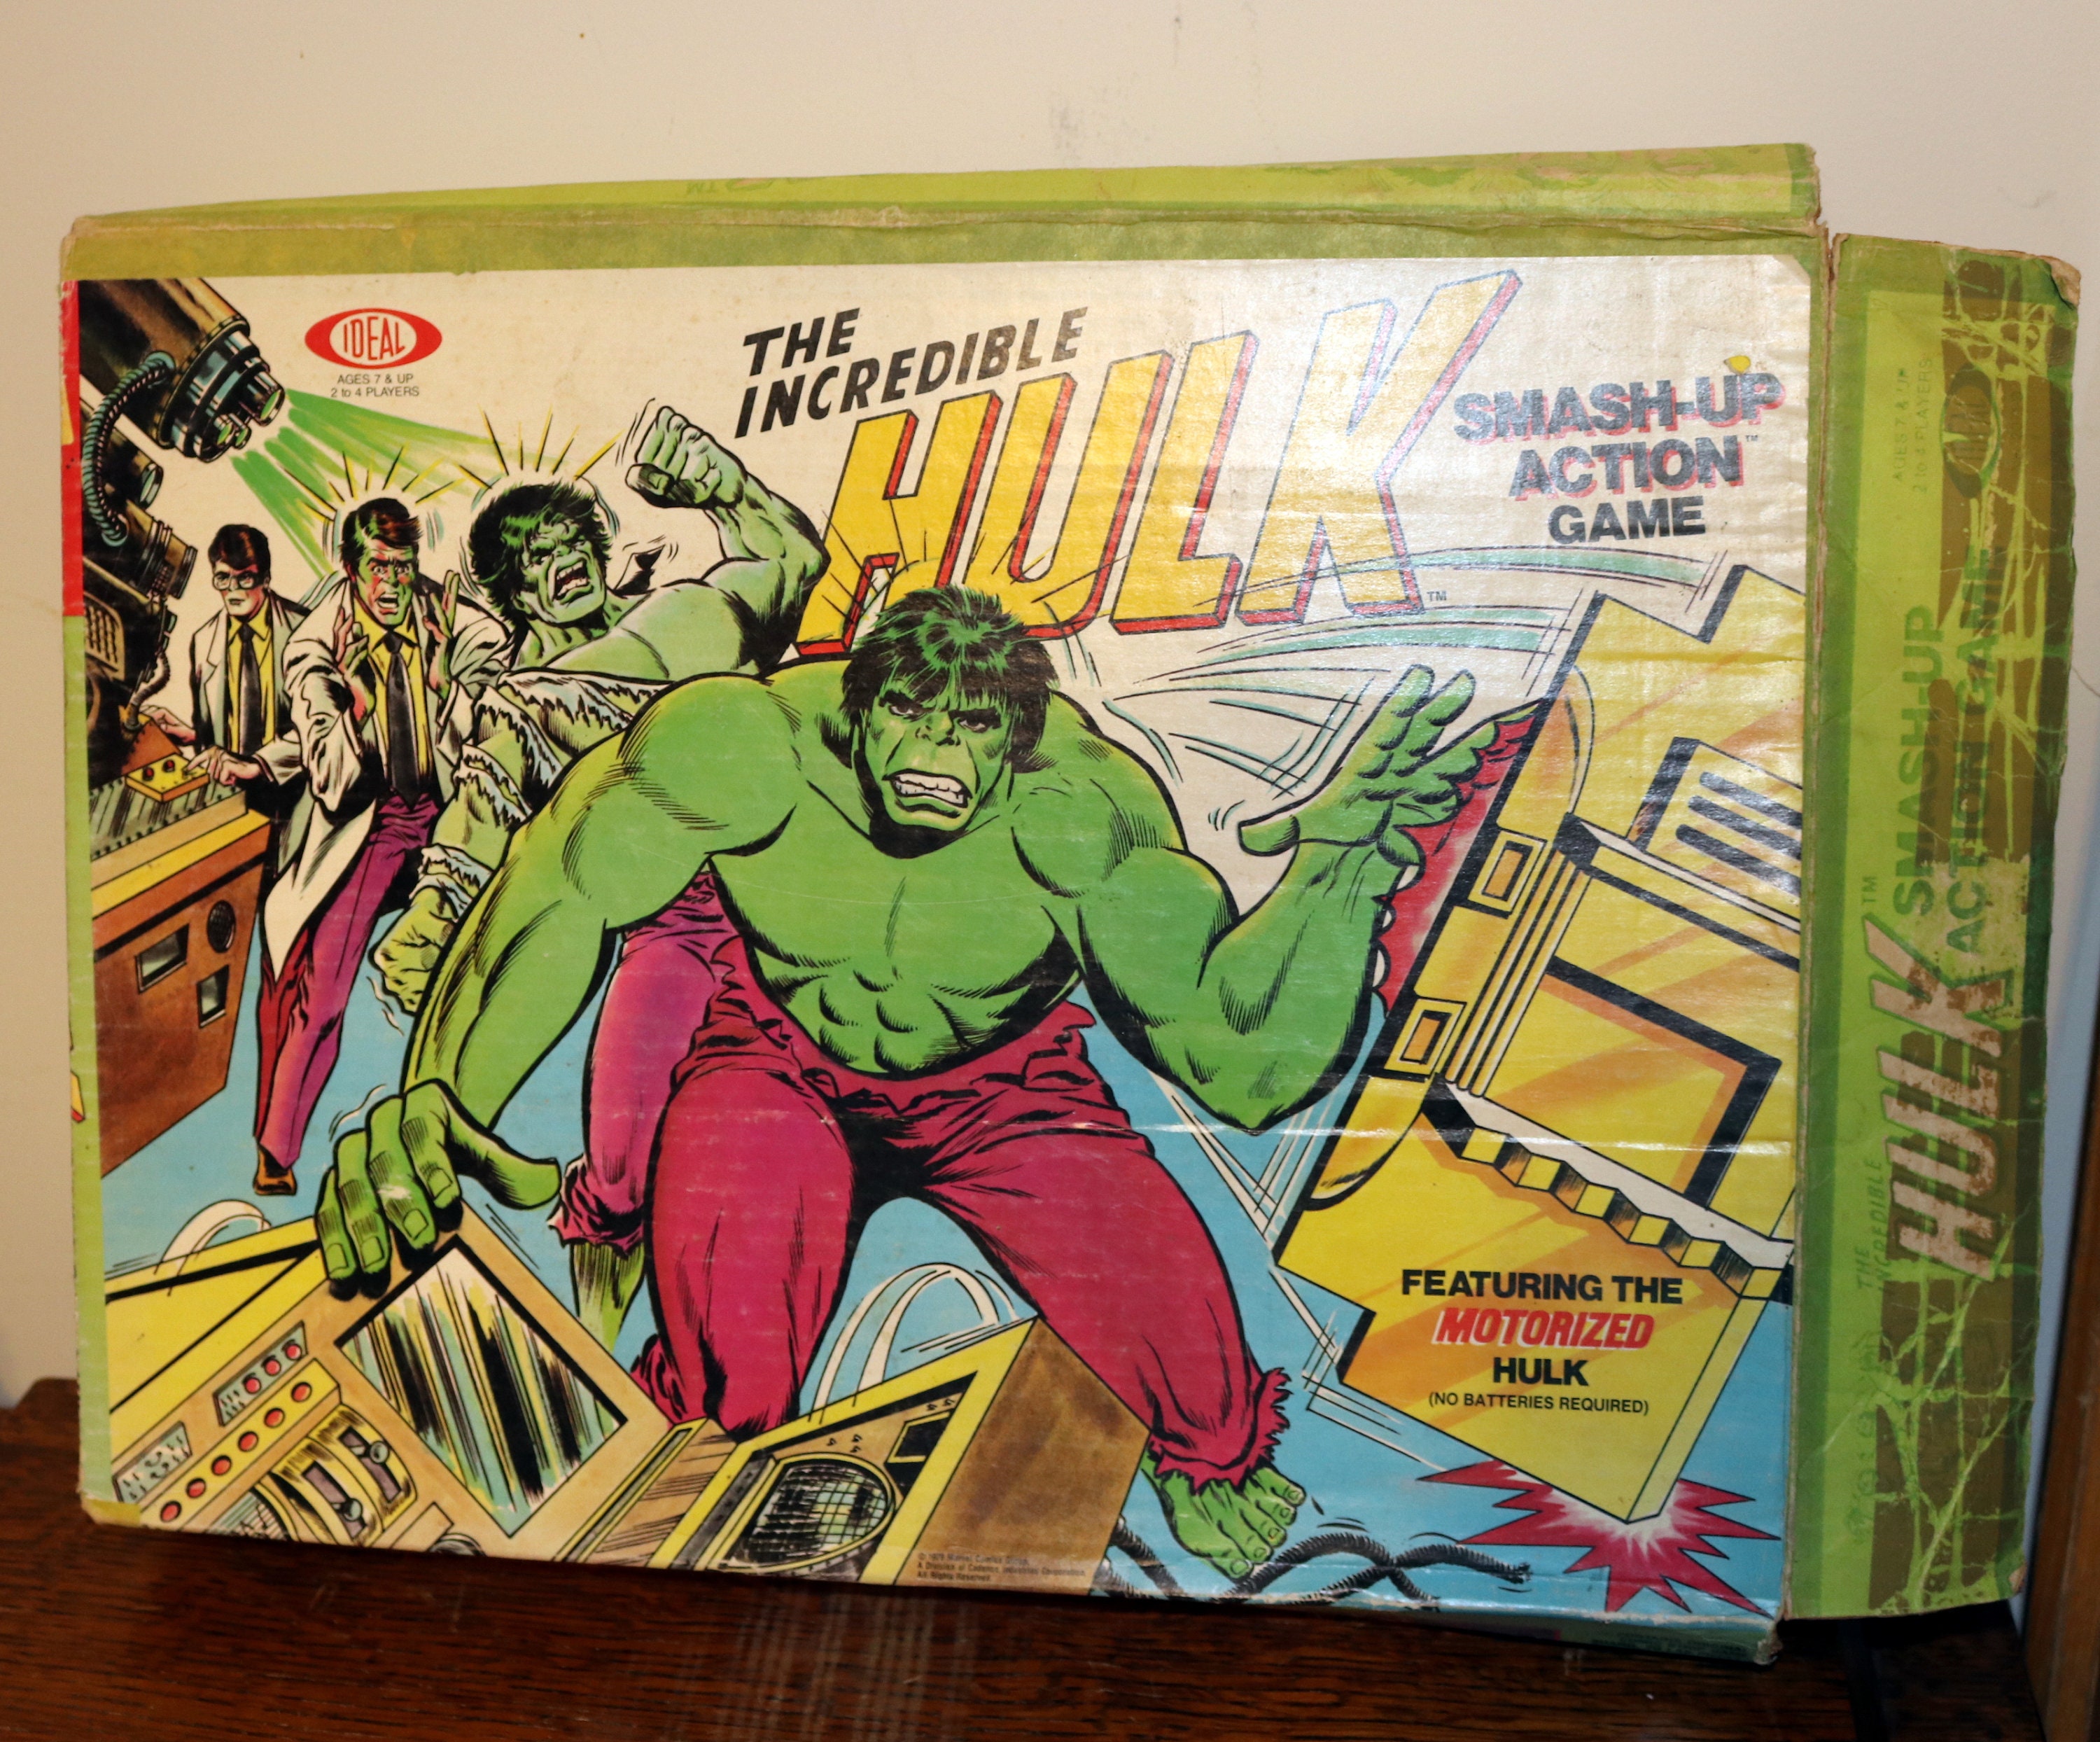 RARE 1979 The Incredible Hulk The Amazing Spiderman Original Story Toilet  Paper